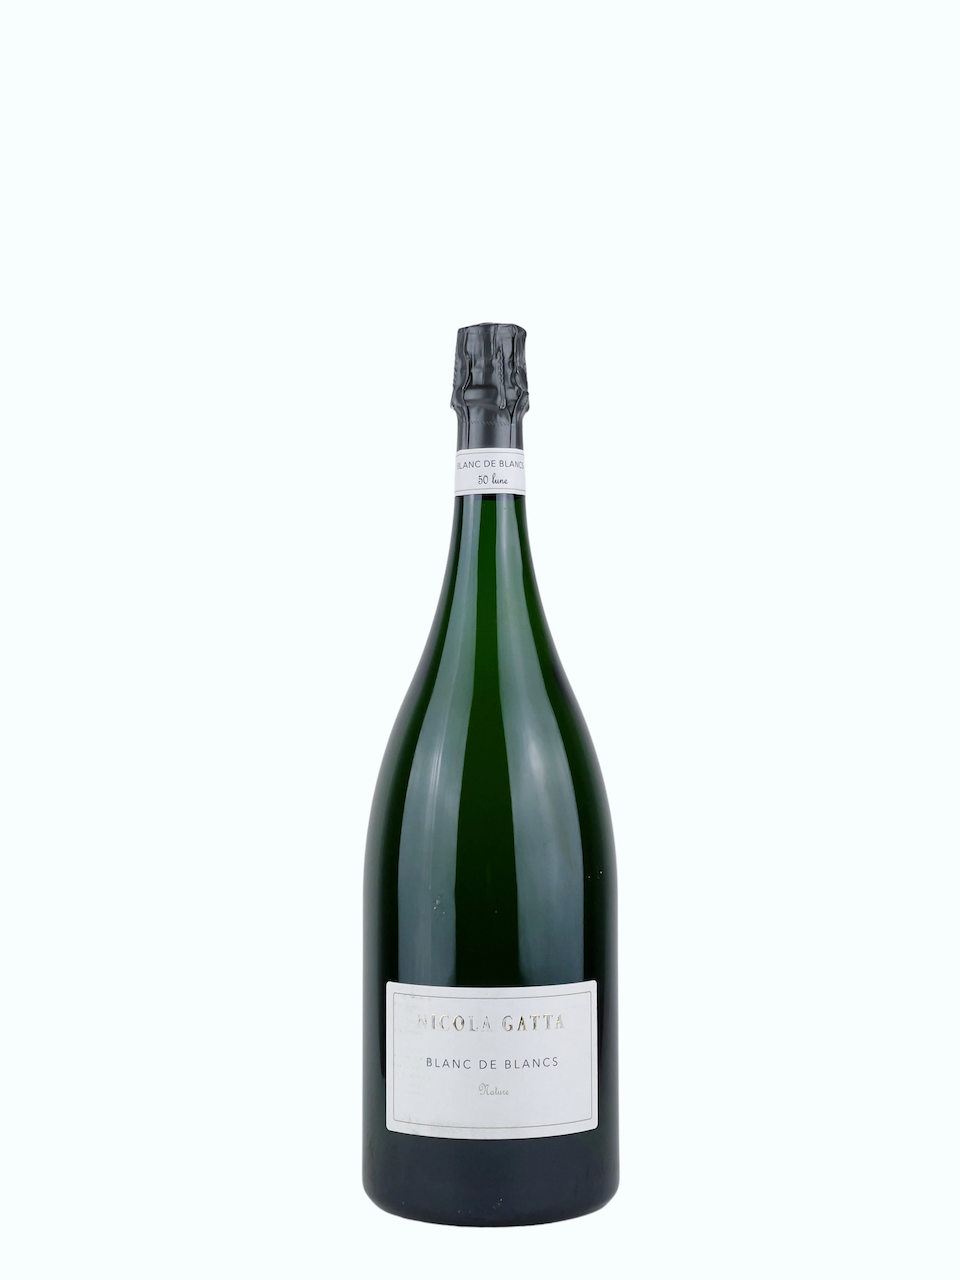 Magnum of Blanc de Blancs, an Artisan Sparkling Wine produce by Nicola Gatta with Chardonnay grapes.